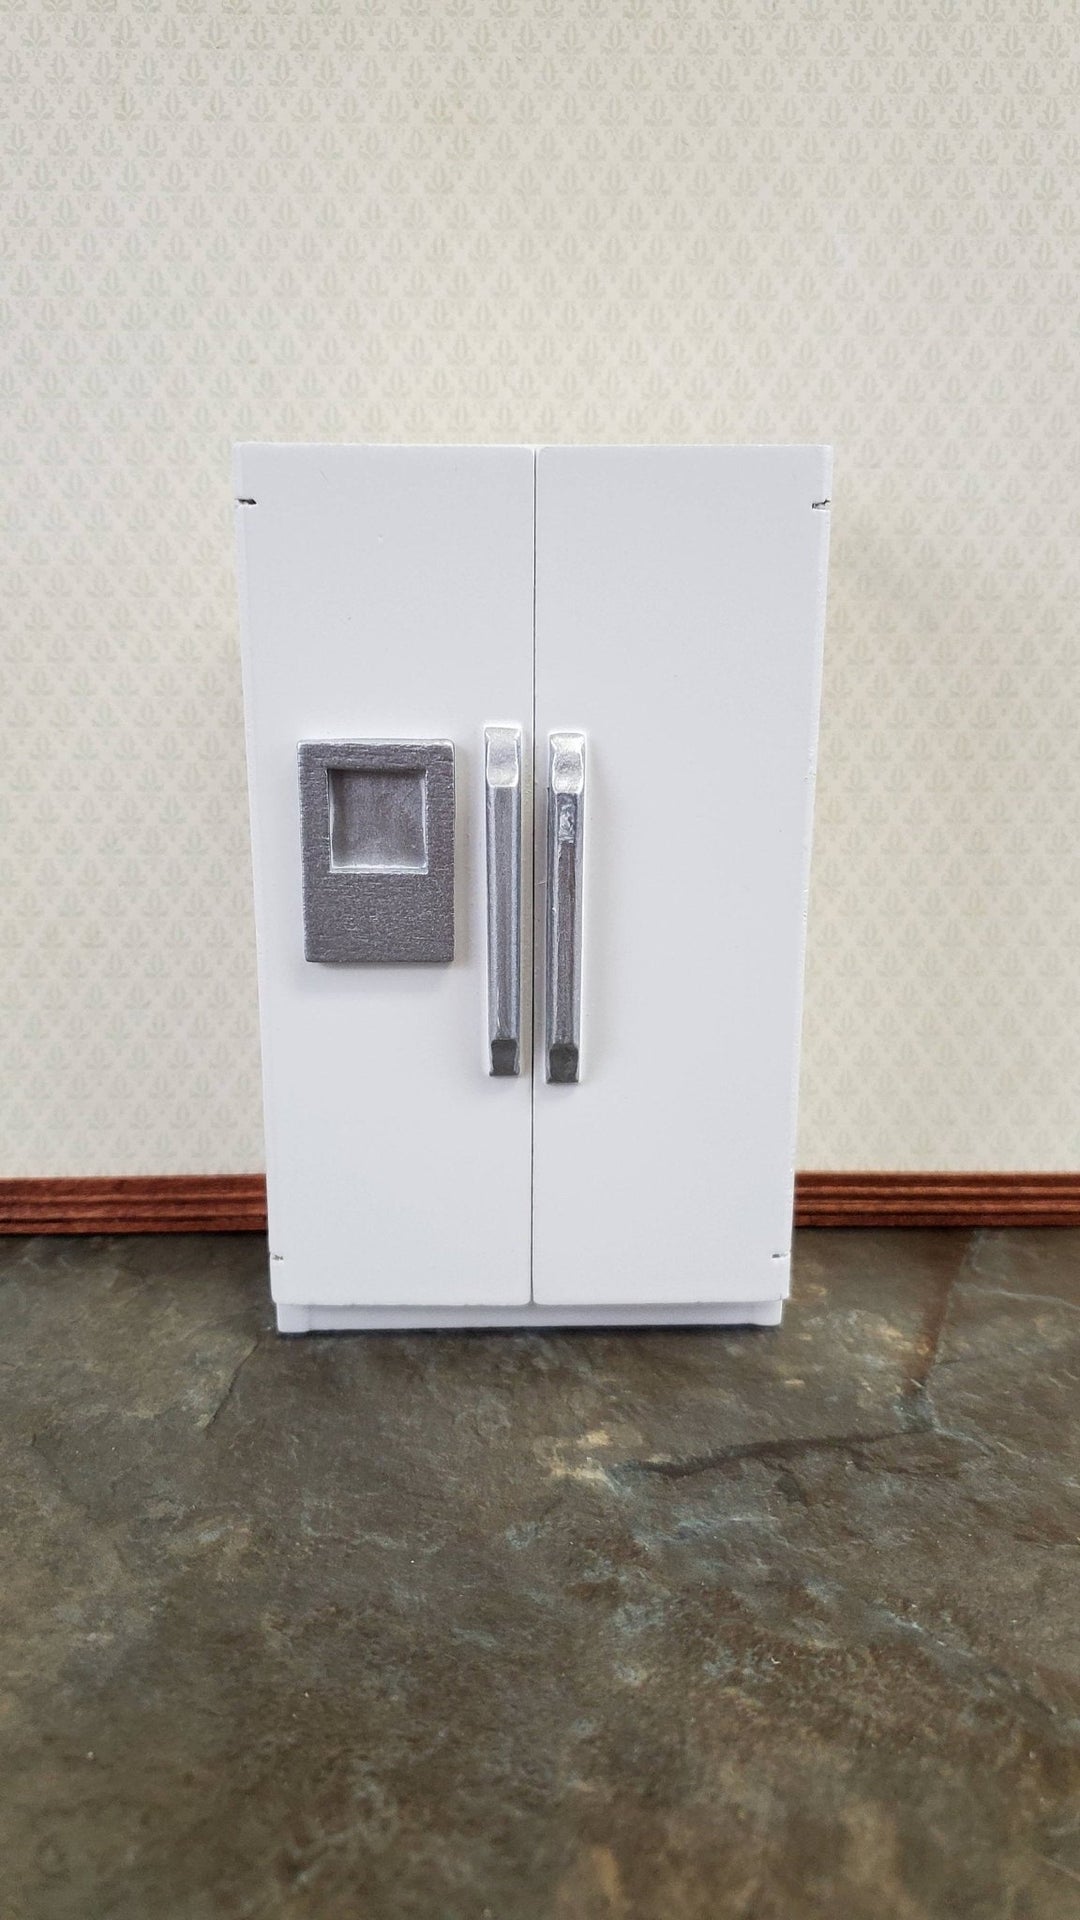 Dollhouse Miniature Fridge Modern Refrigerator White 1:12 Scale w/Ice Dispencer - Miniature Crush